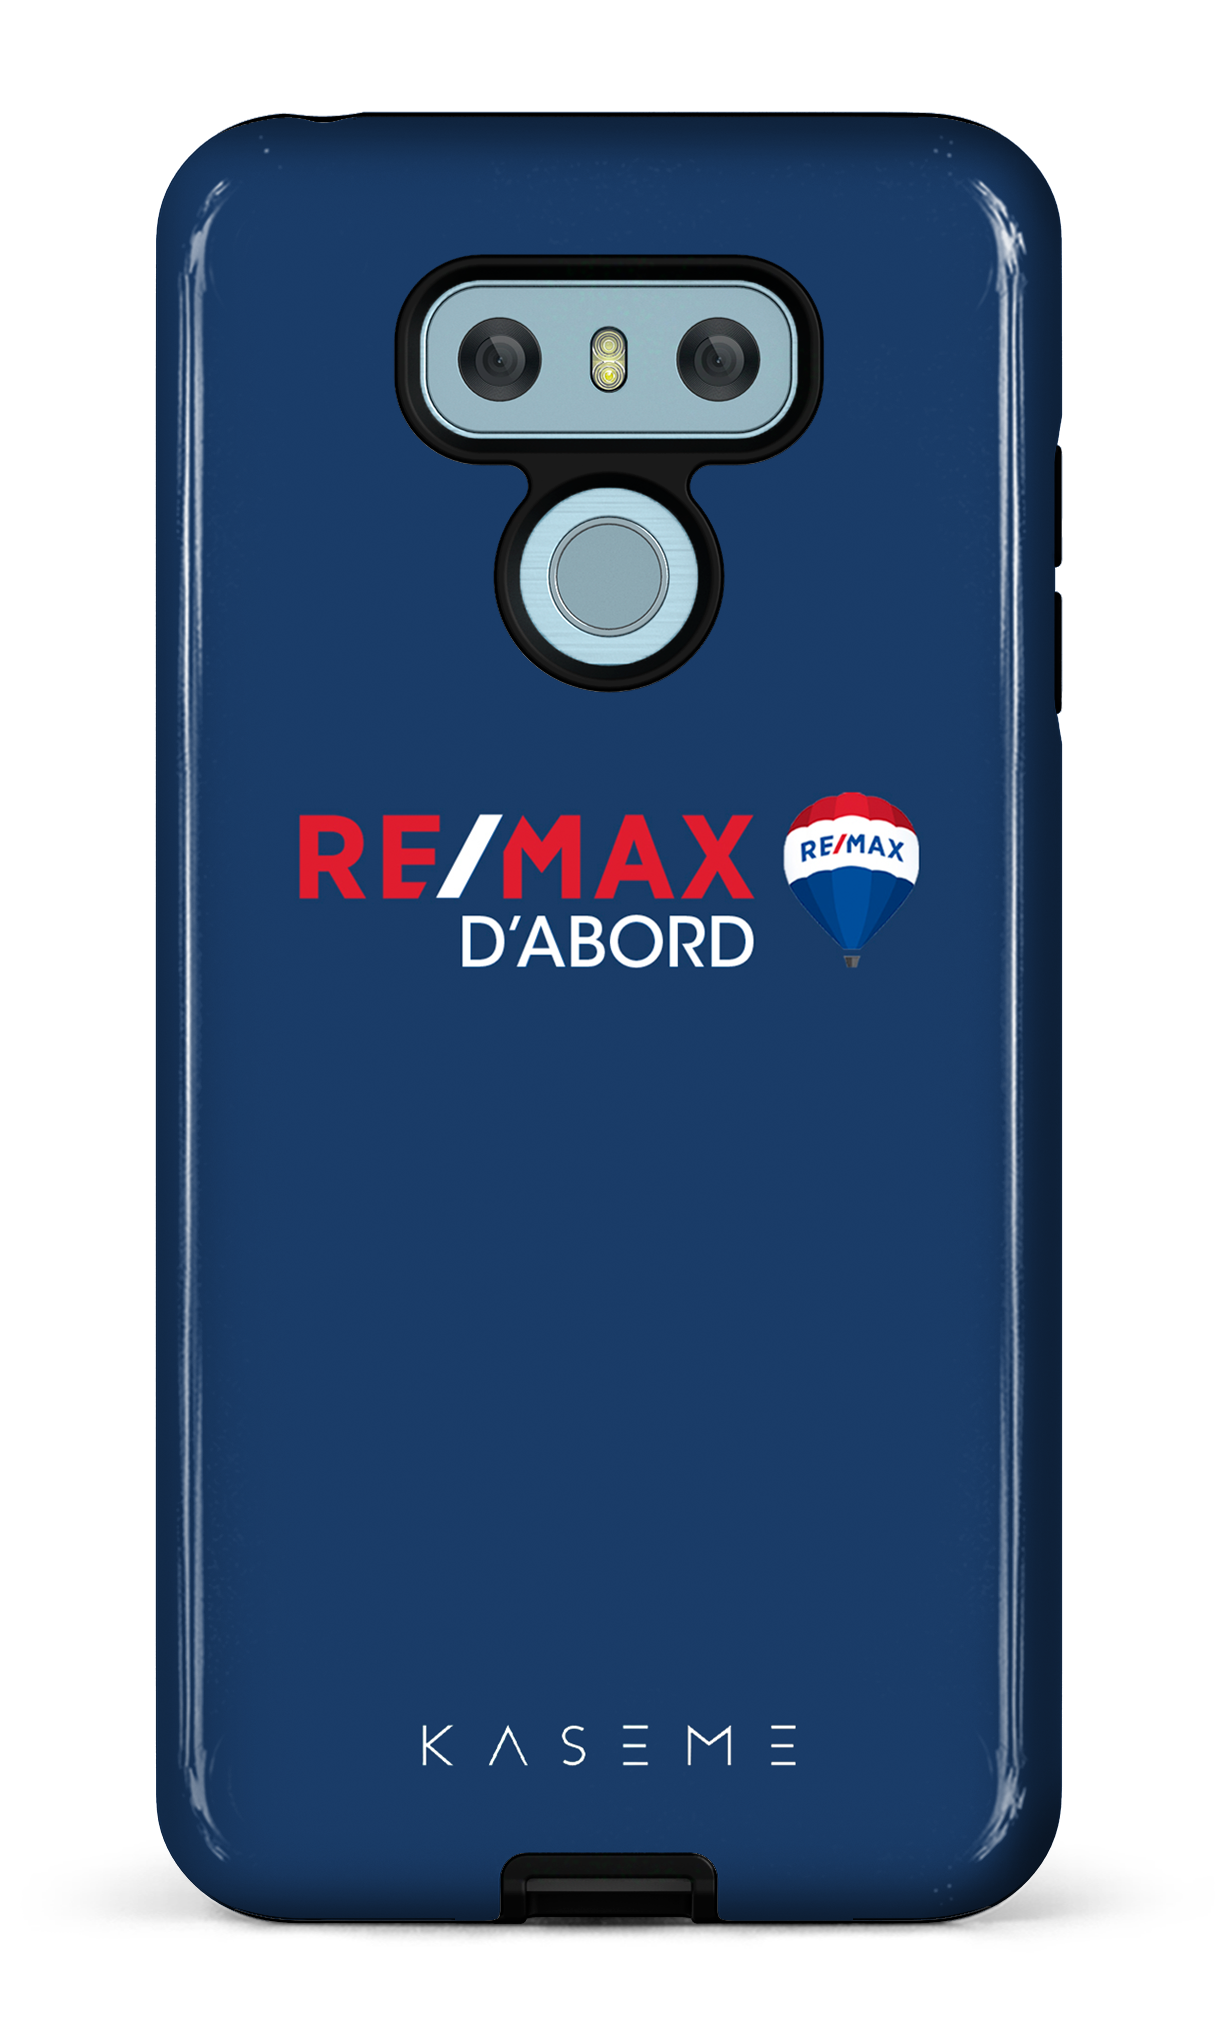 Remax D'abord Bleu - LG G6